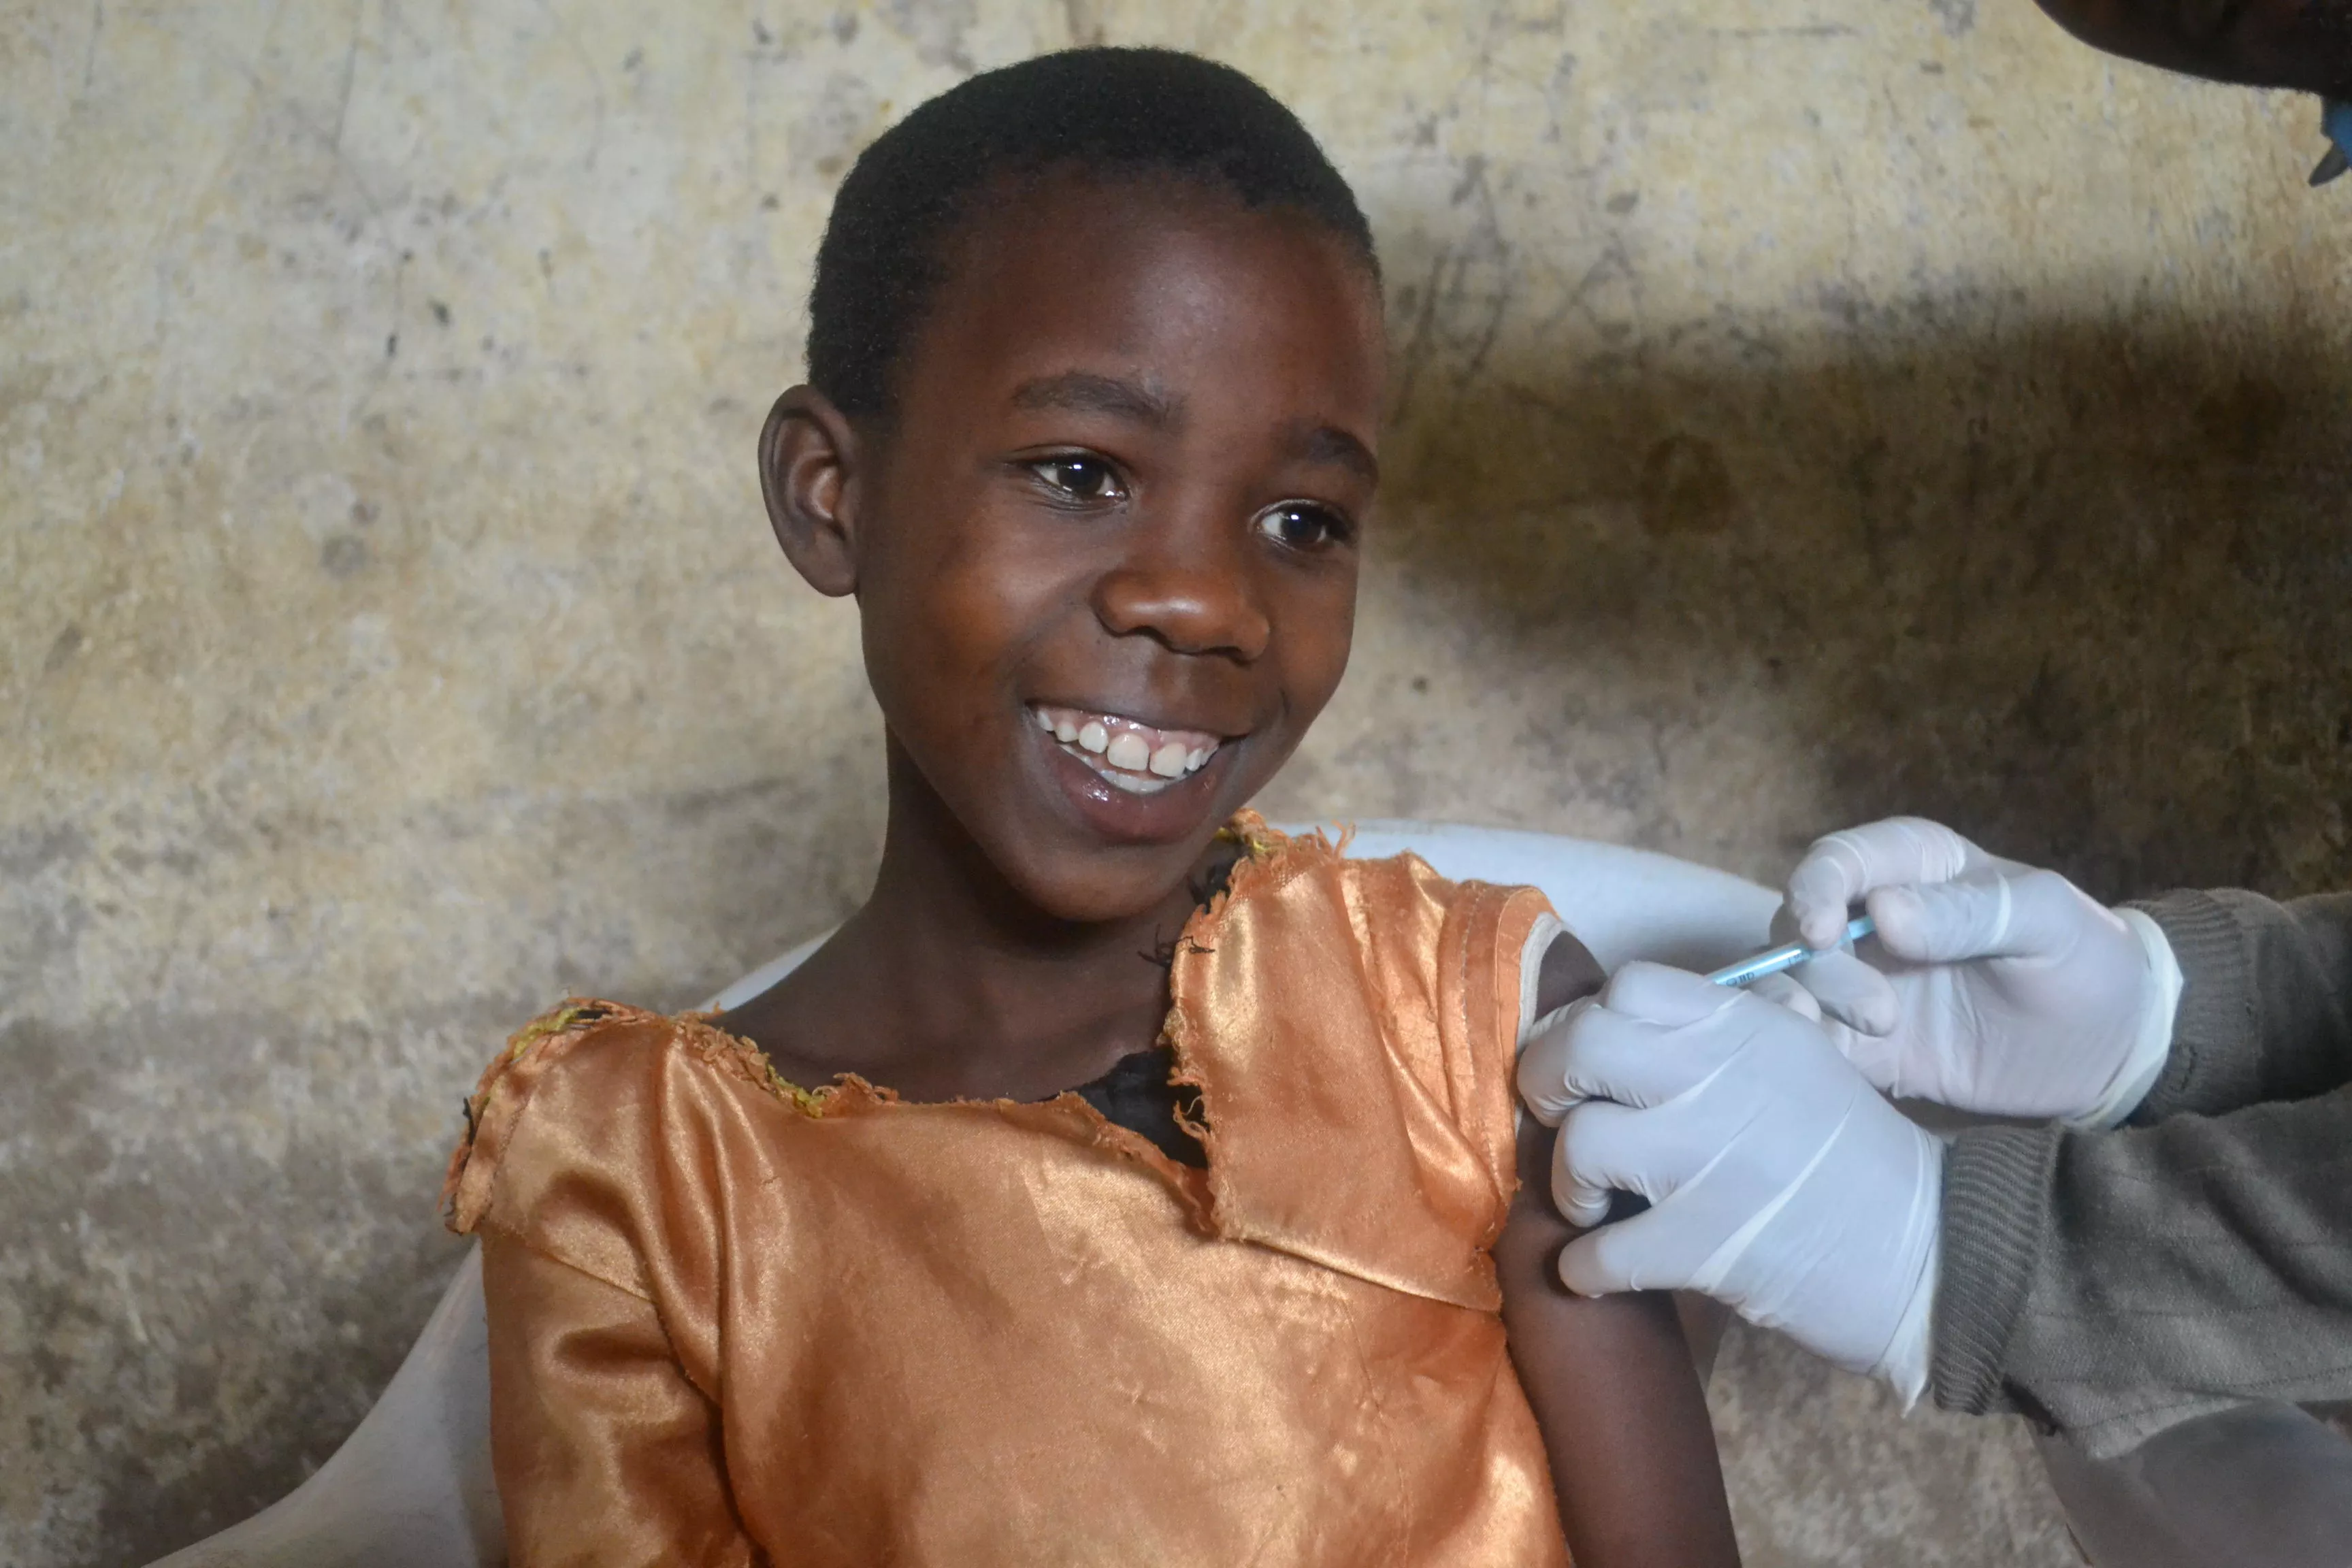 Vanessa, 9, receives her HPV vaccination at school. Chiradzulu District, Malawi.